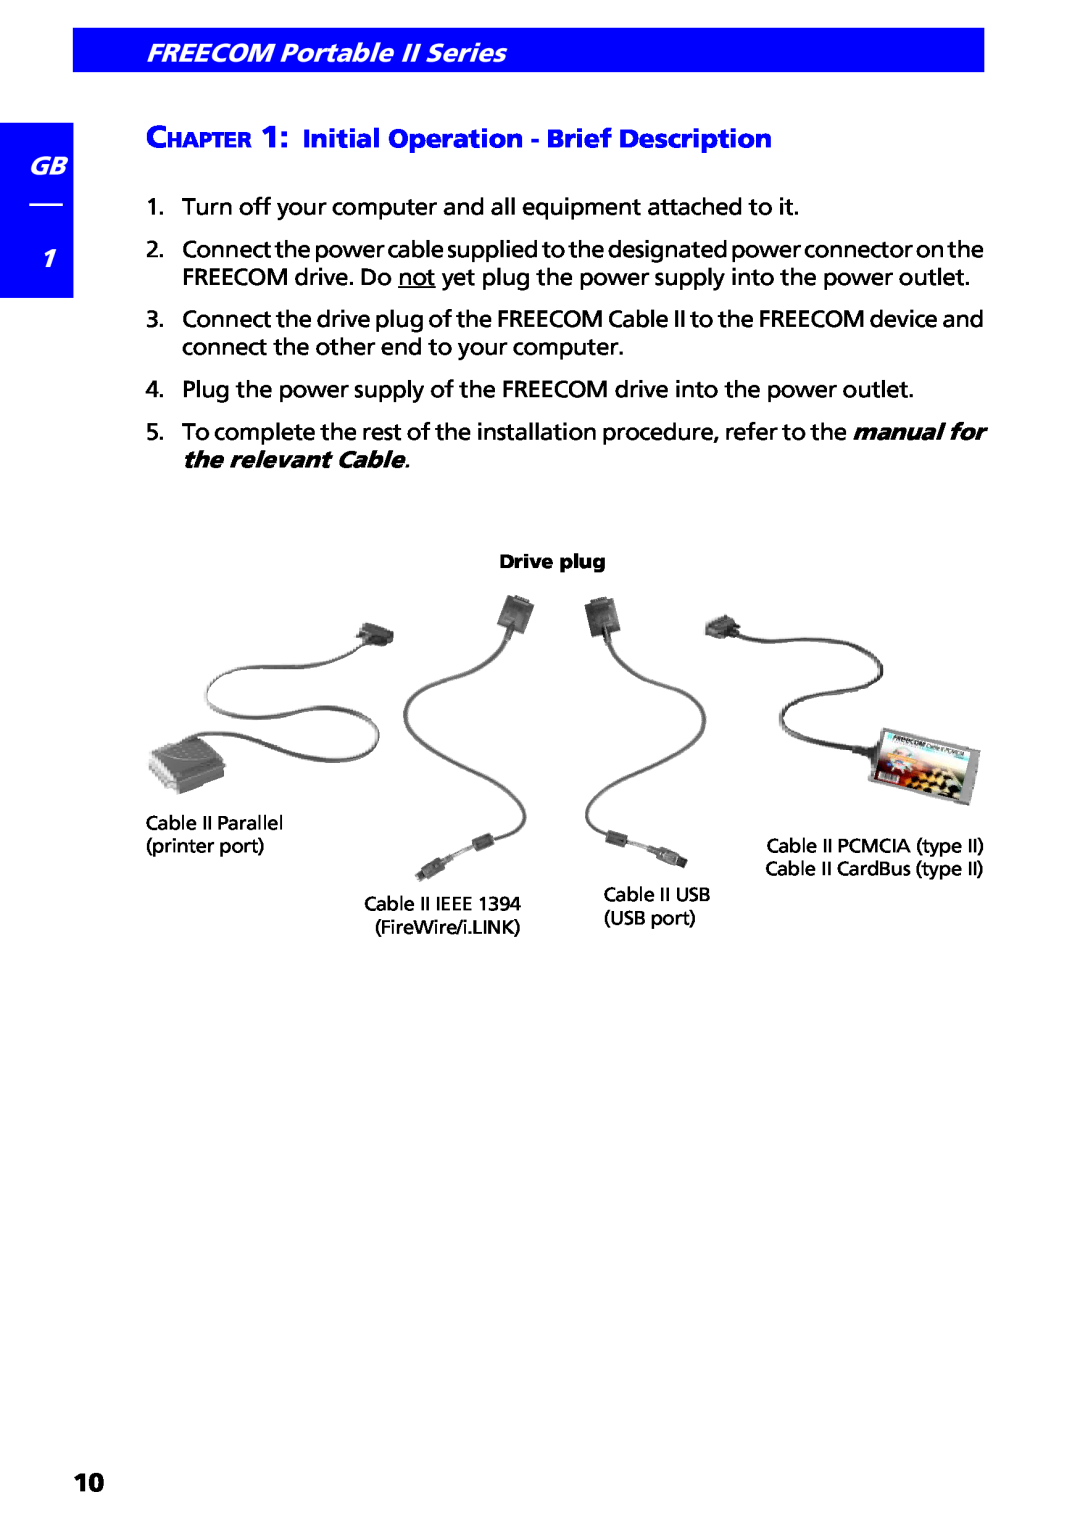 Freecom Technologies manual Gb, Initial Operation - Brief Description, FREECOM Portable II Series 